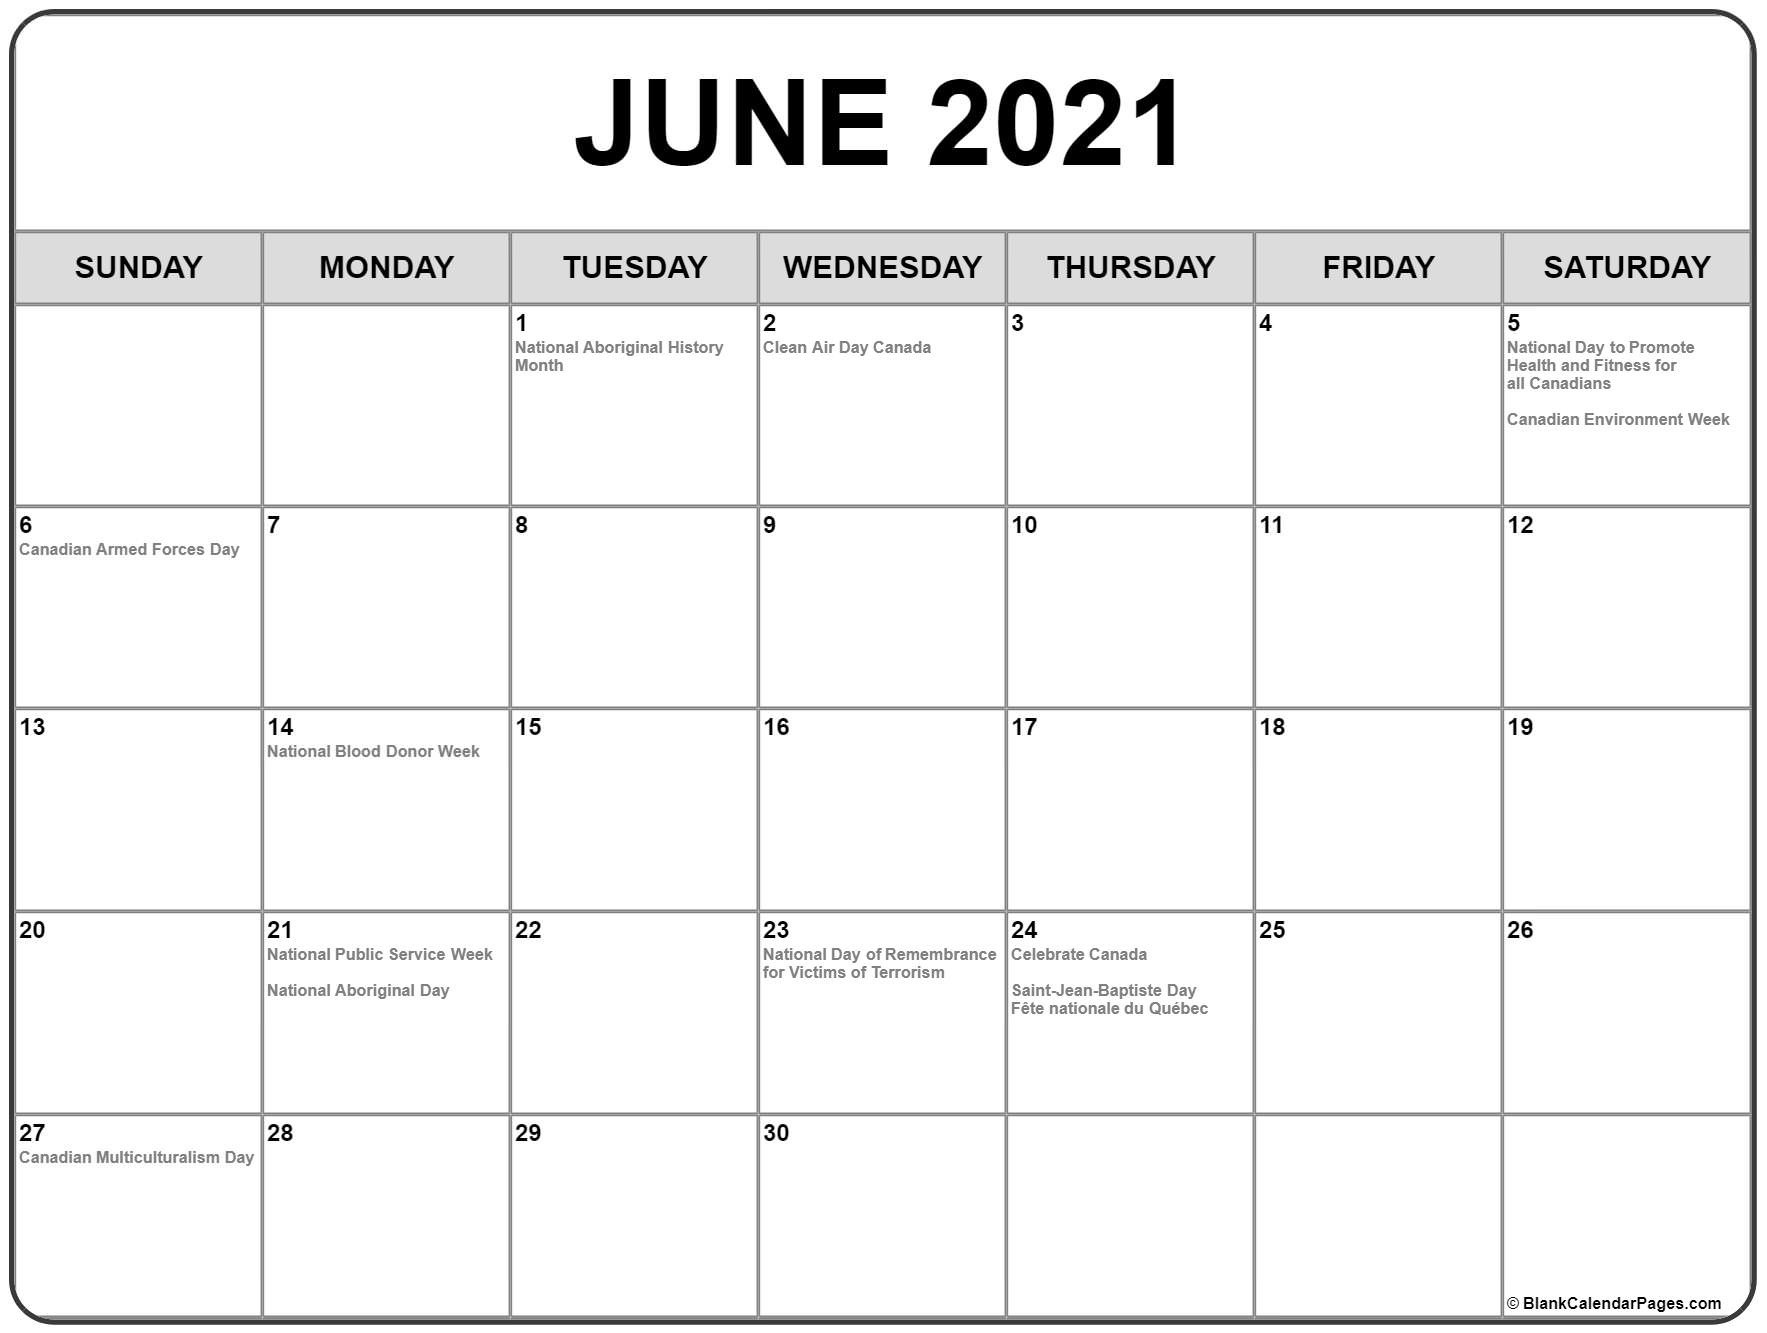 June 2021 Calendar With Holidays - Calendar 2021 June 2021 Calendar With Holidays